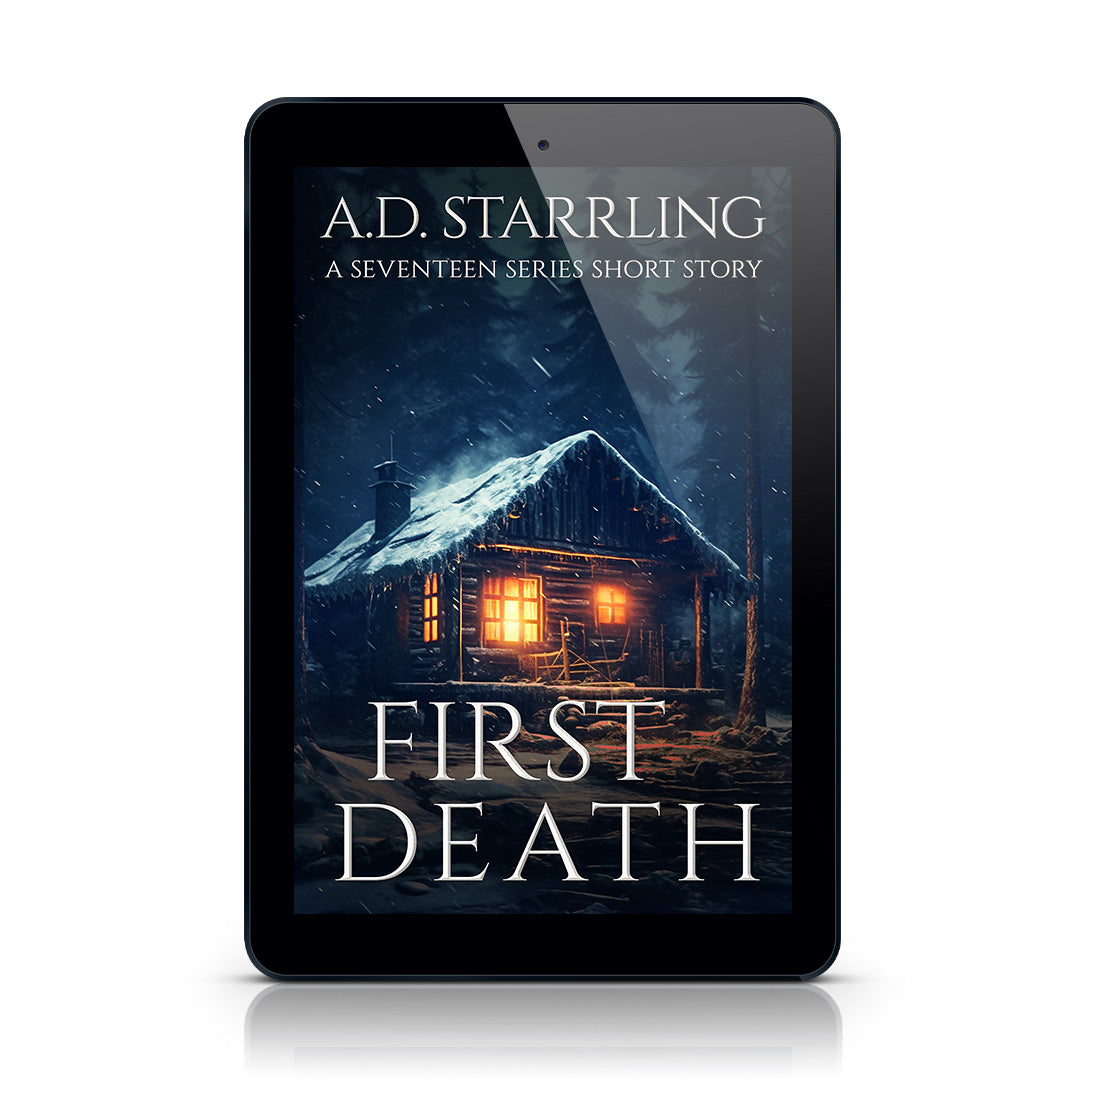 First Death (A Seventeen Series Short Story) EBOOK supernatural thriller urban fantasy author ad starrling